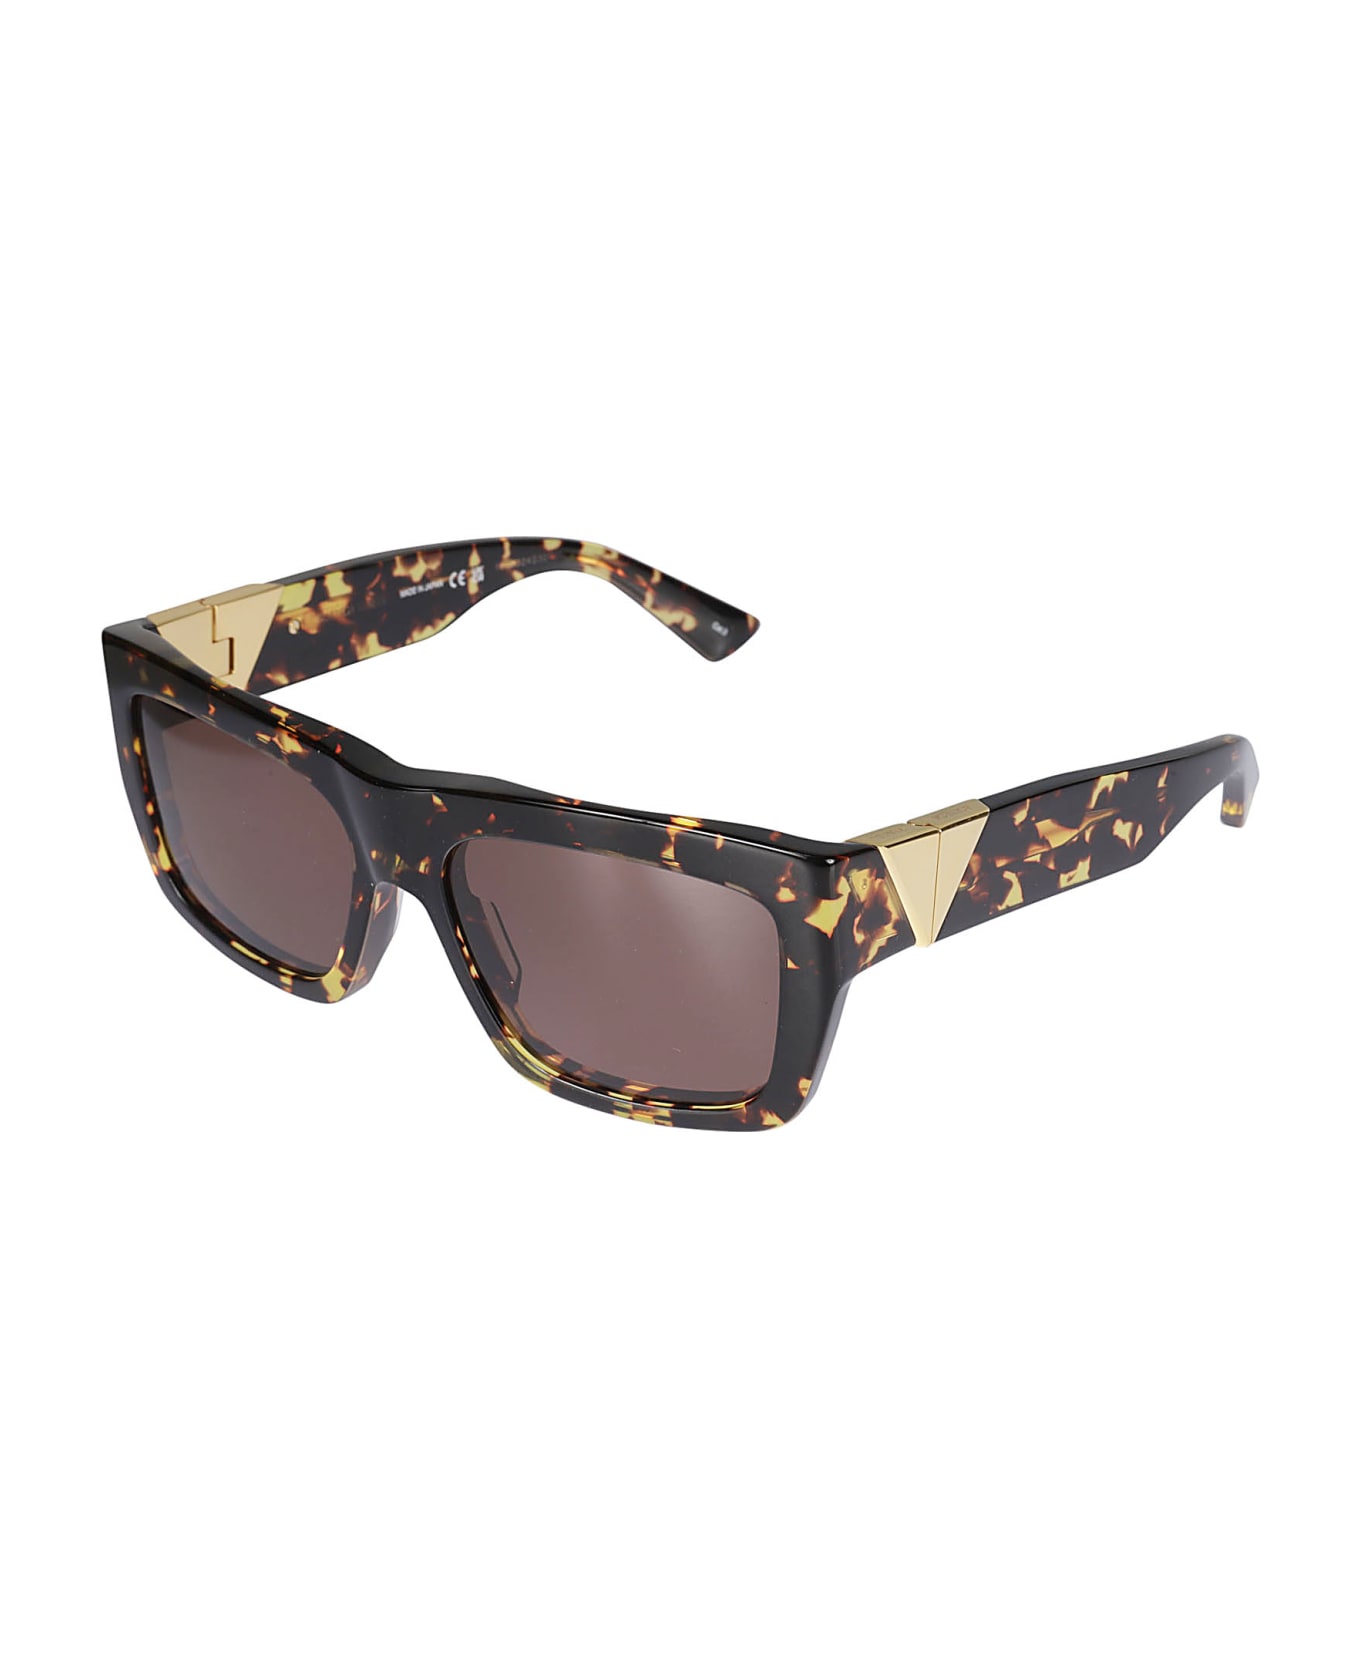 Bottega Veneta Eyewear Bold Rectangular Sunglasses - 002 havana havana brown